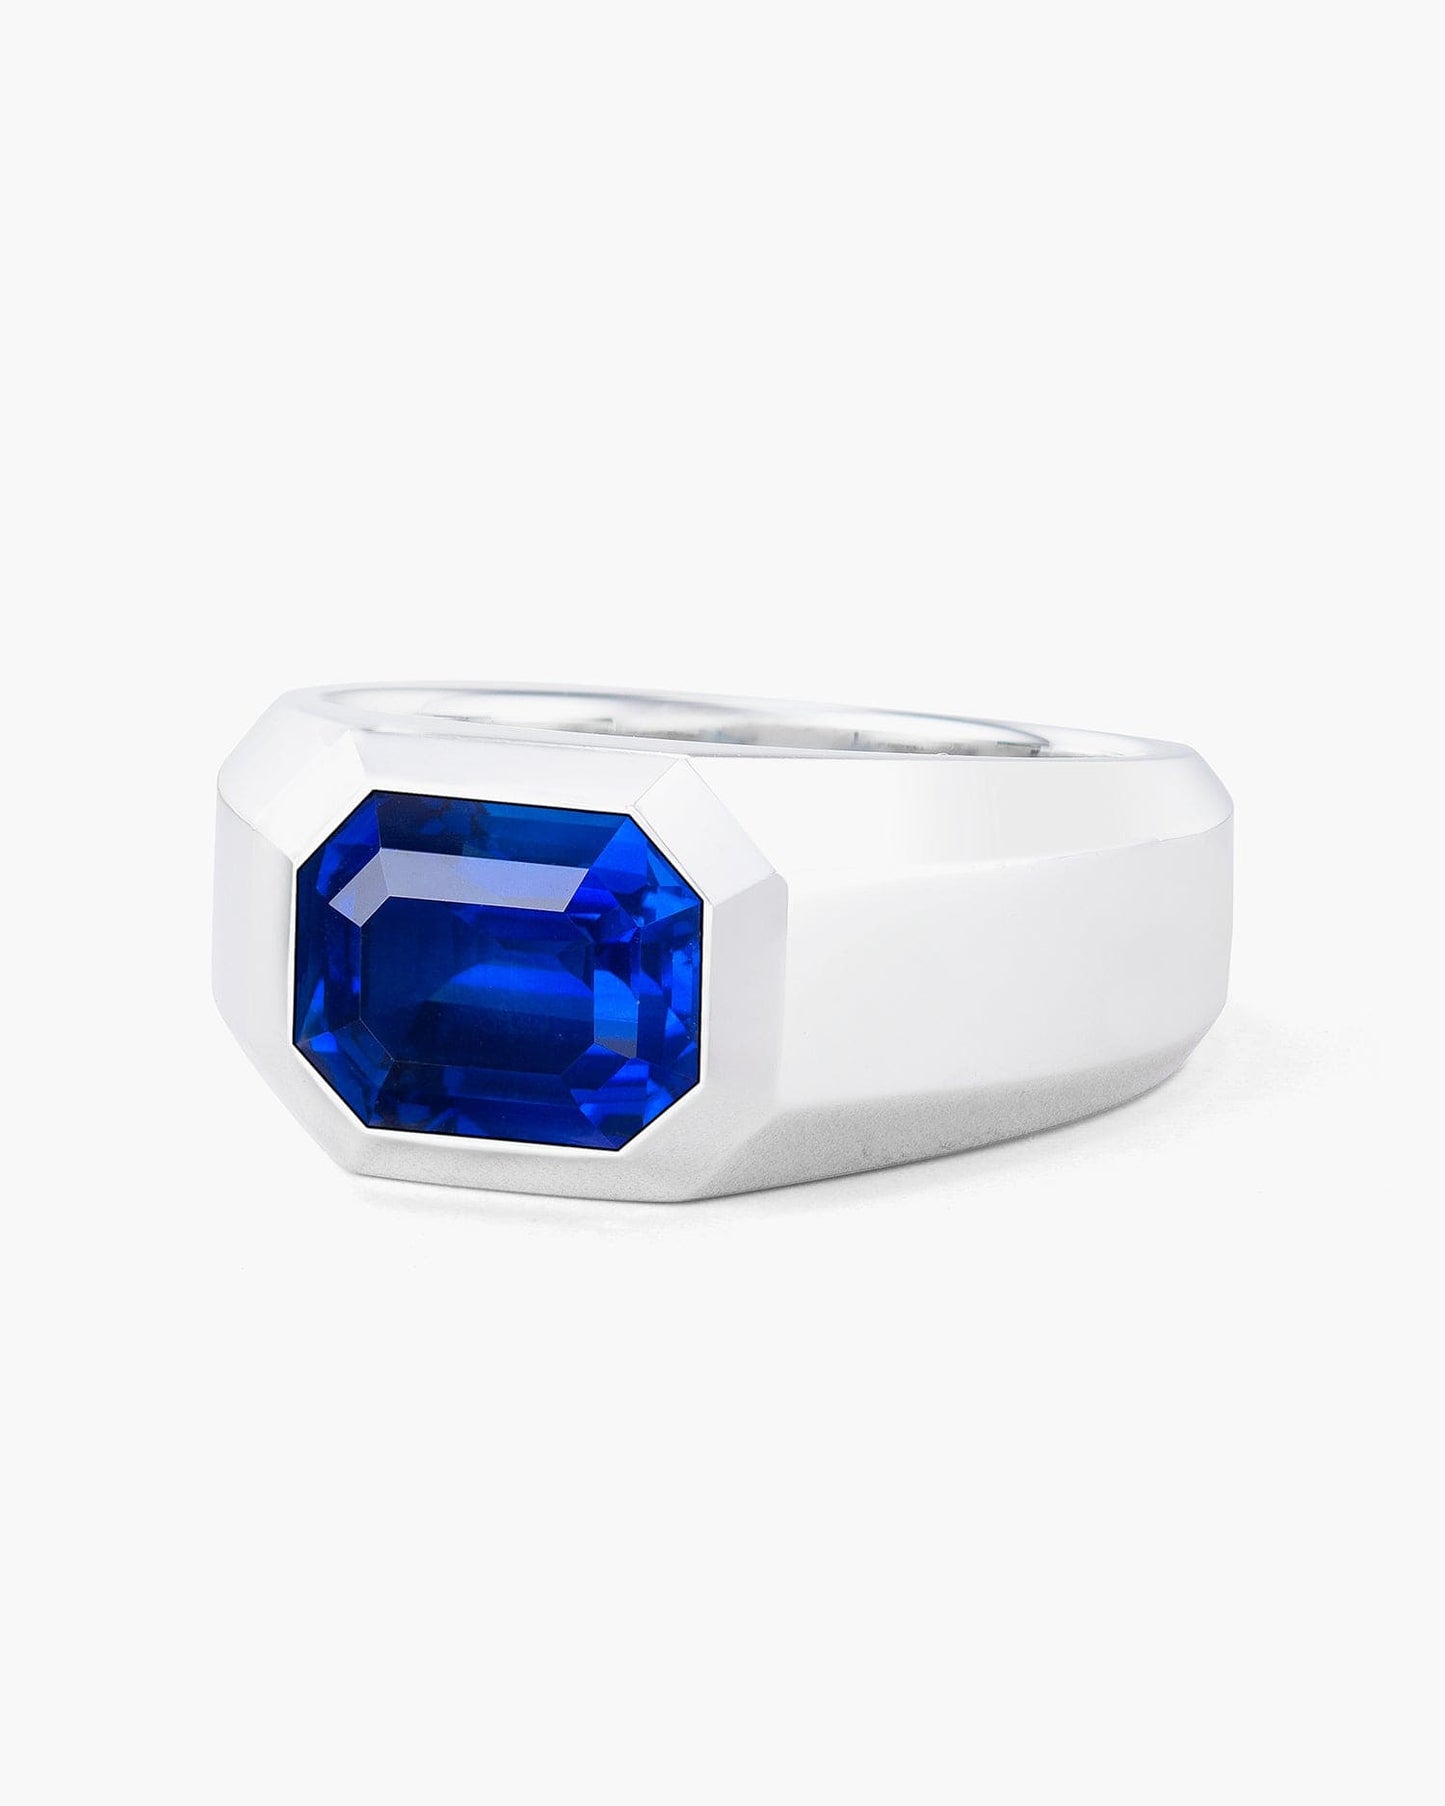 4.39 carat Emerald Cut Ceylon Sapphire Gentlemen's Ring